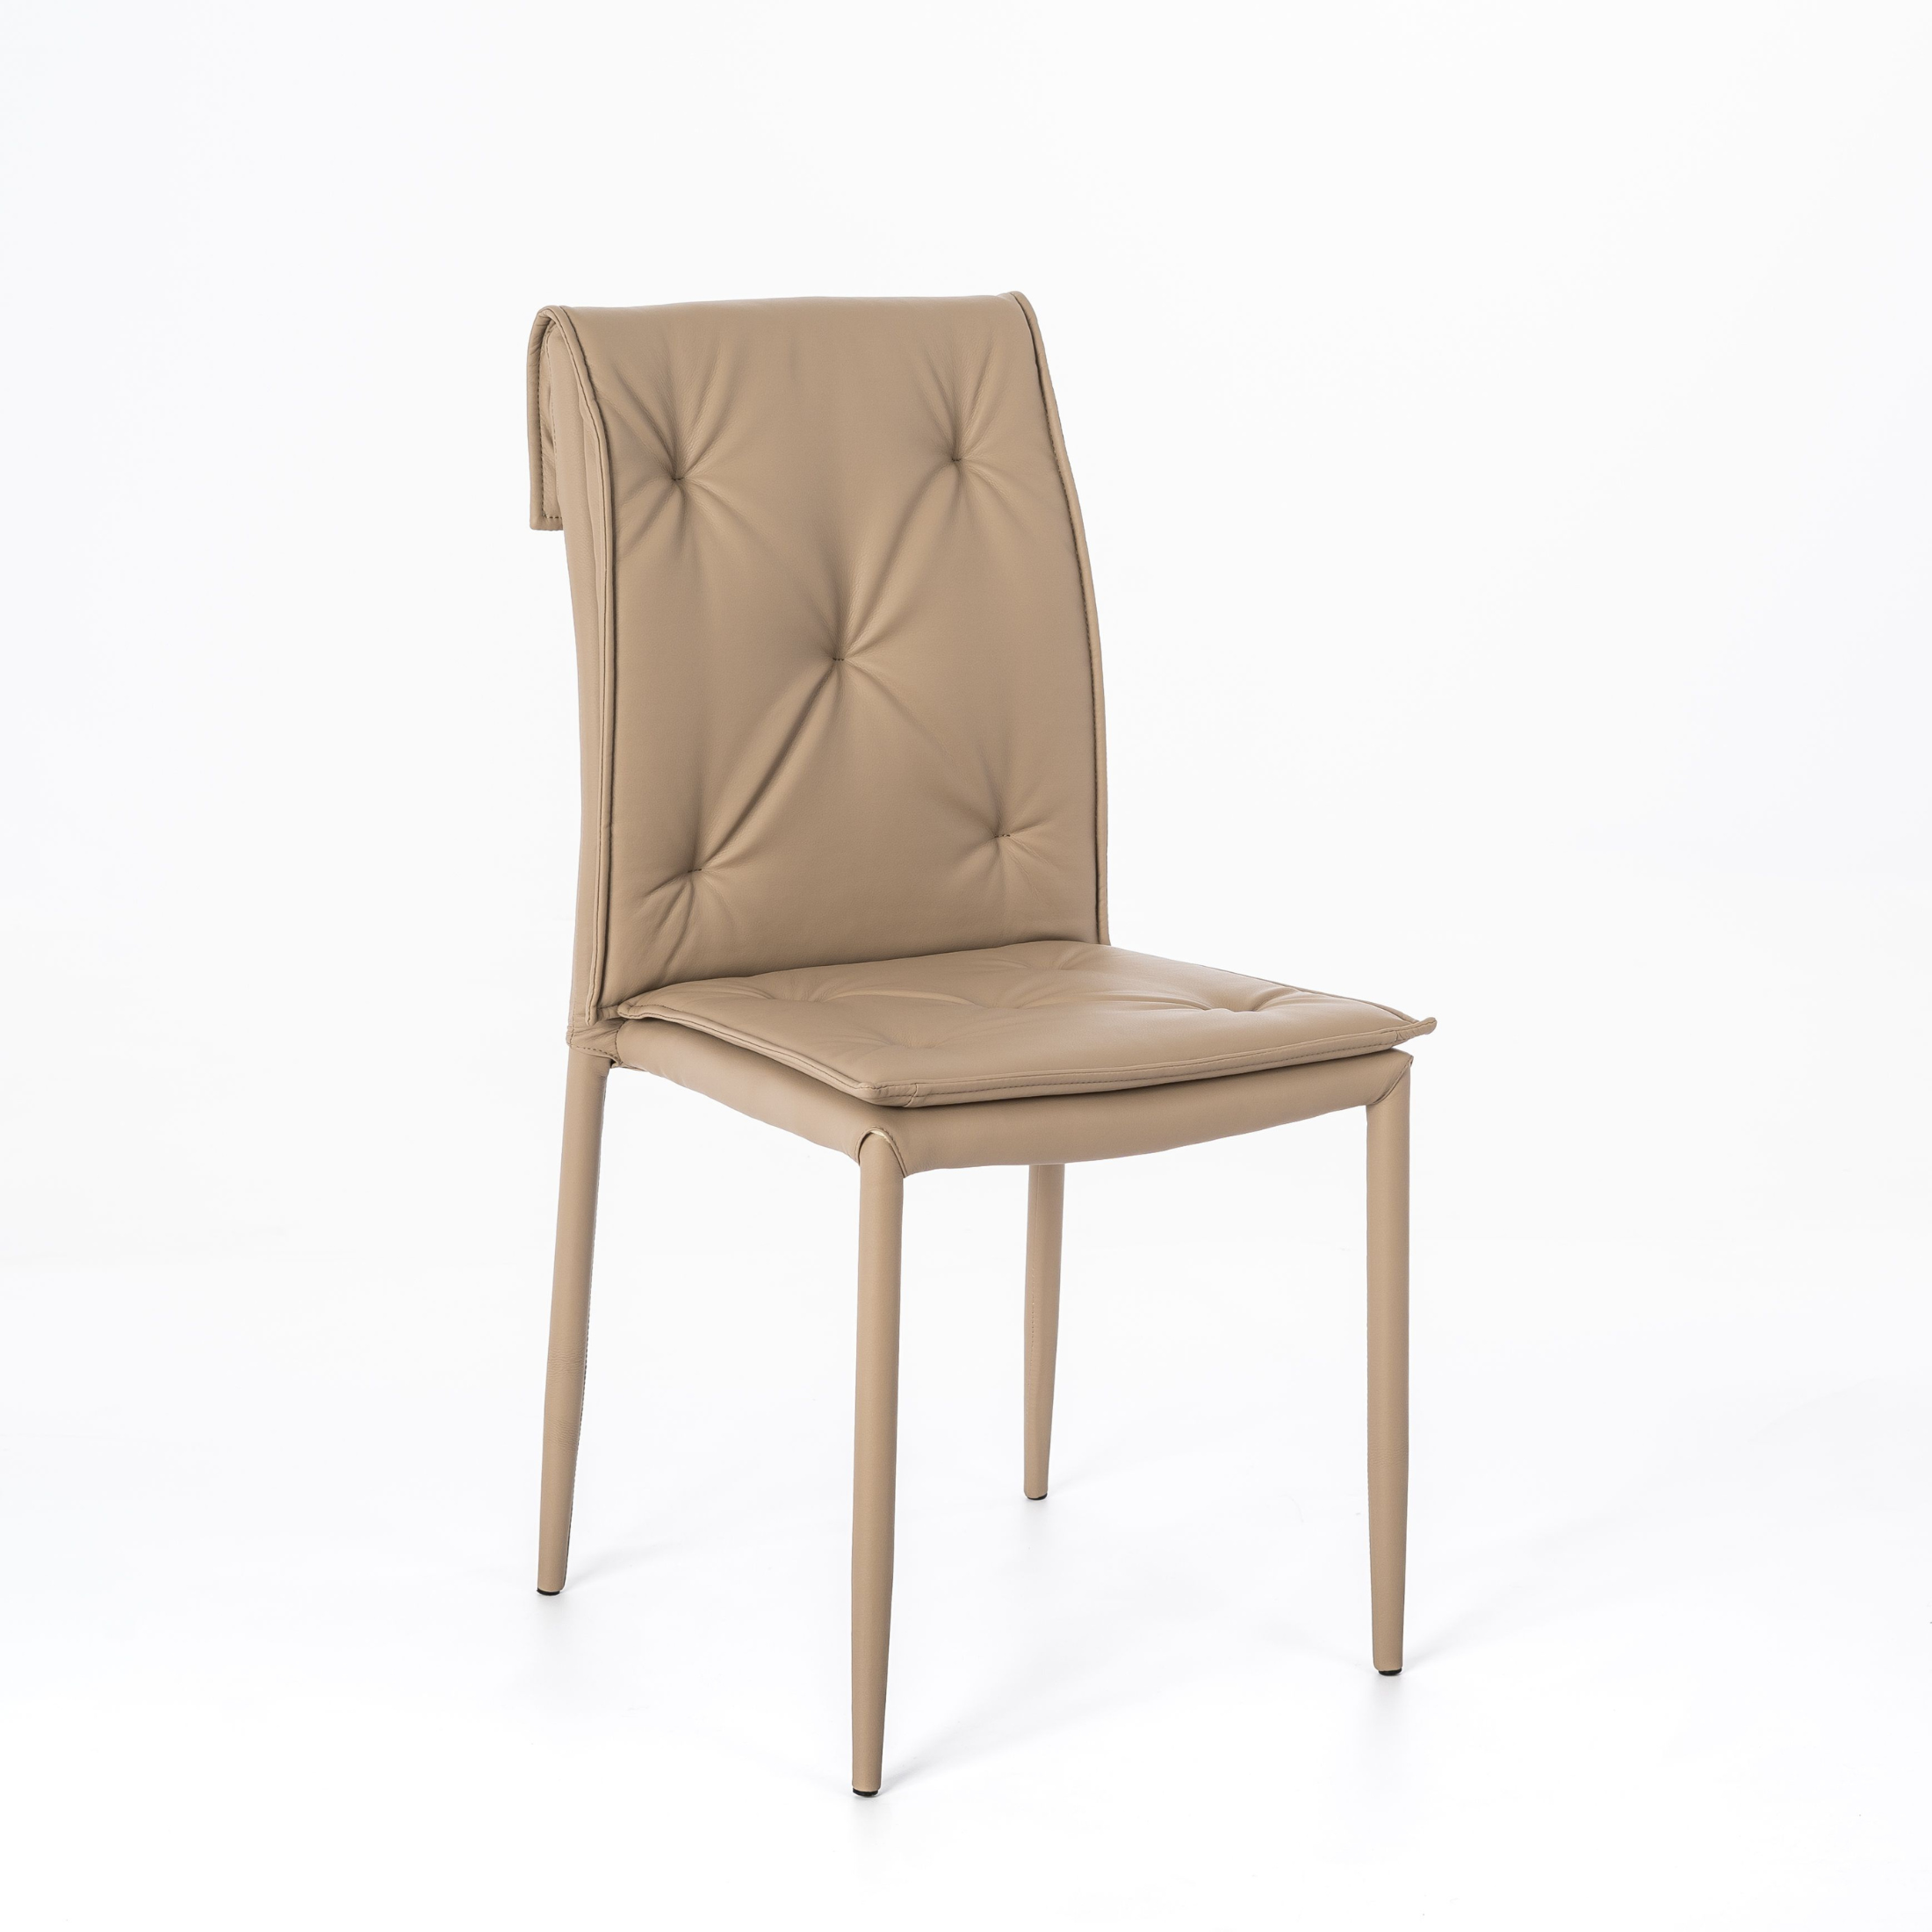 Silla acolchada símil piel "Carla" sillón moderno 56x44 91h cm